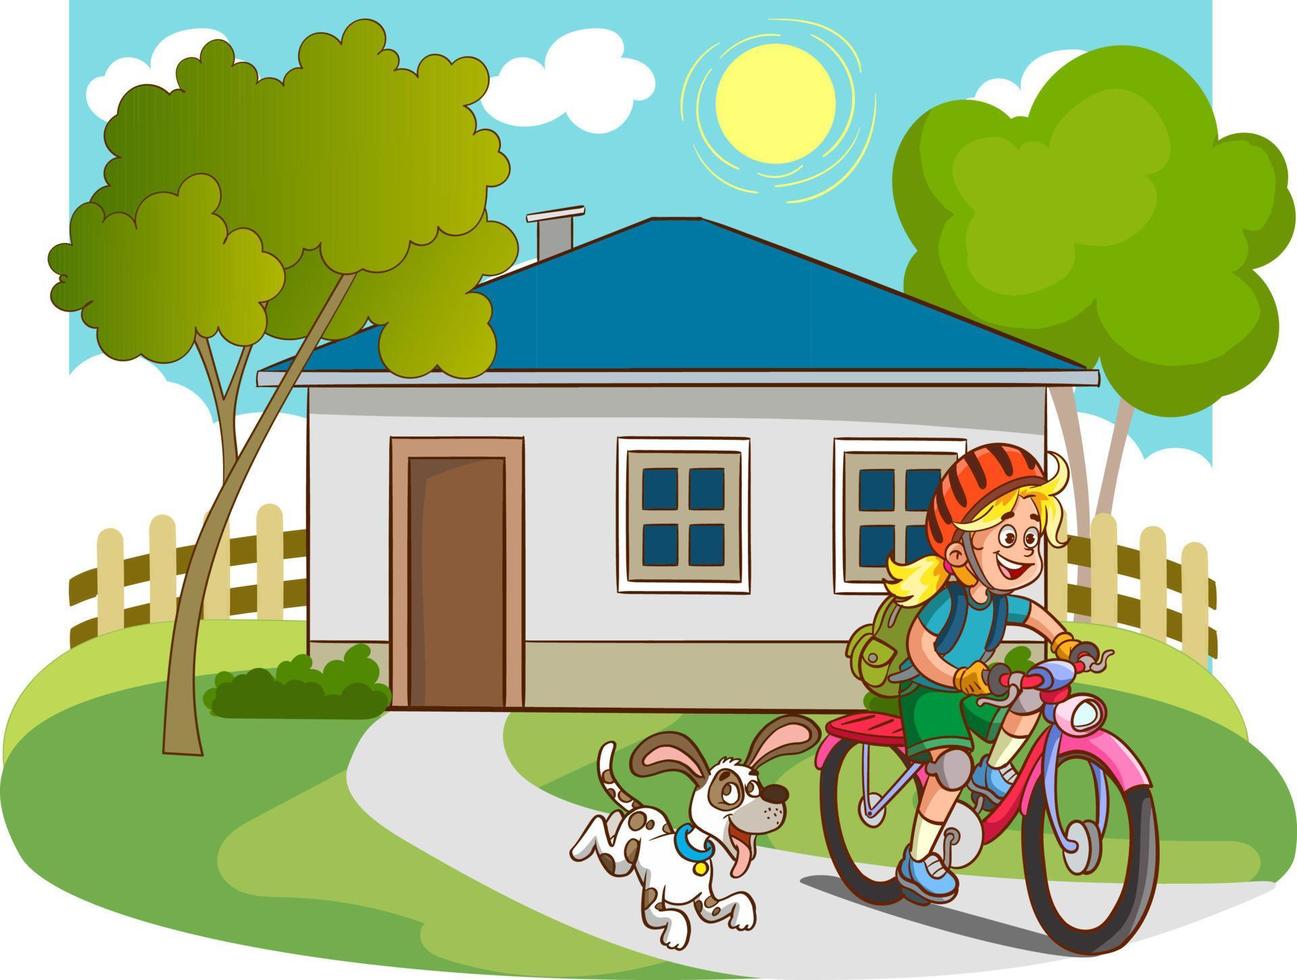 cute boy riding bike to school cartoon vector